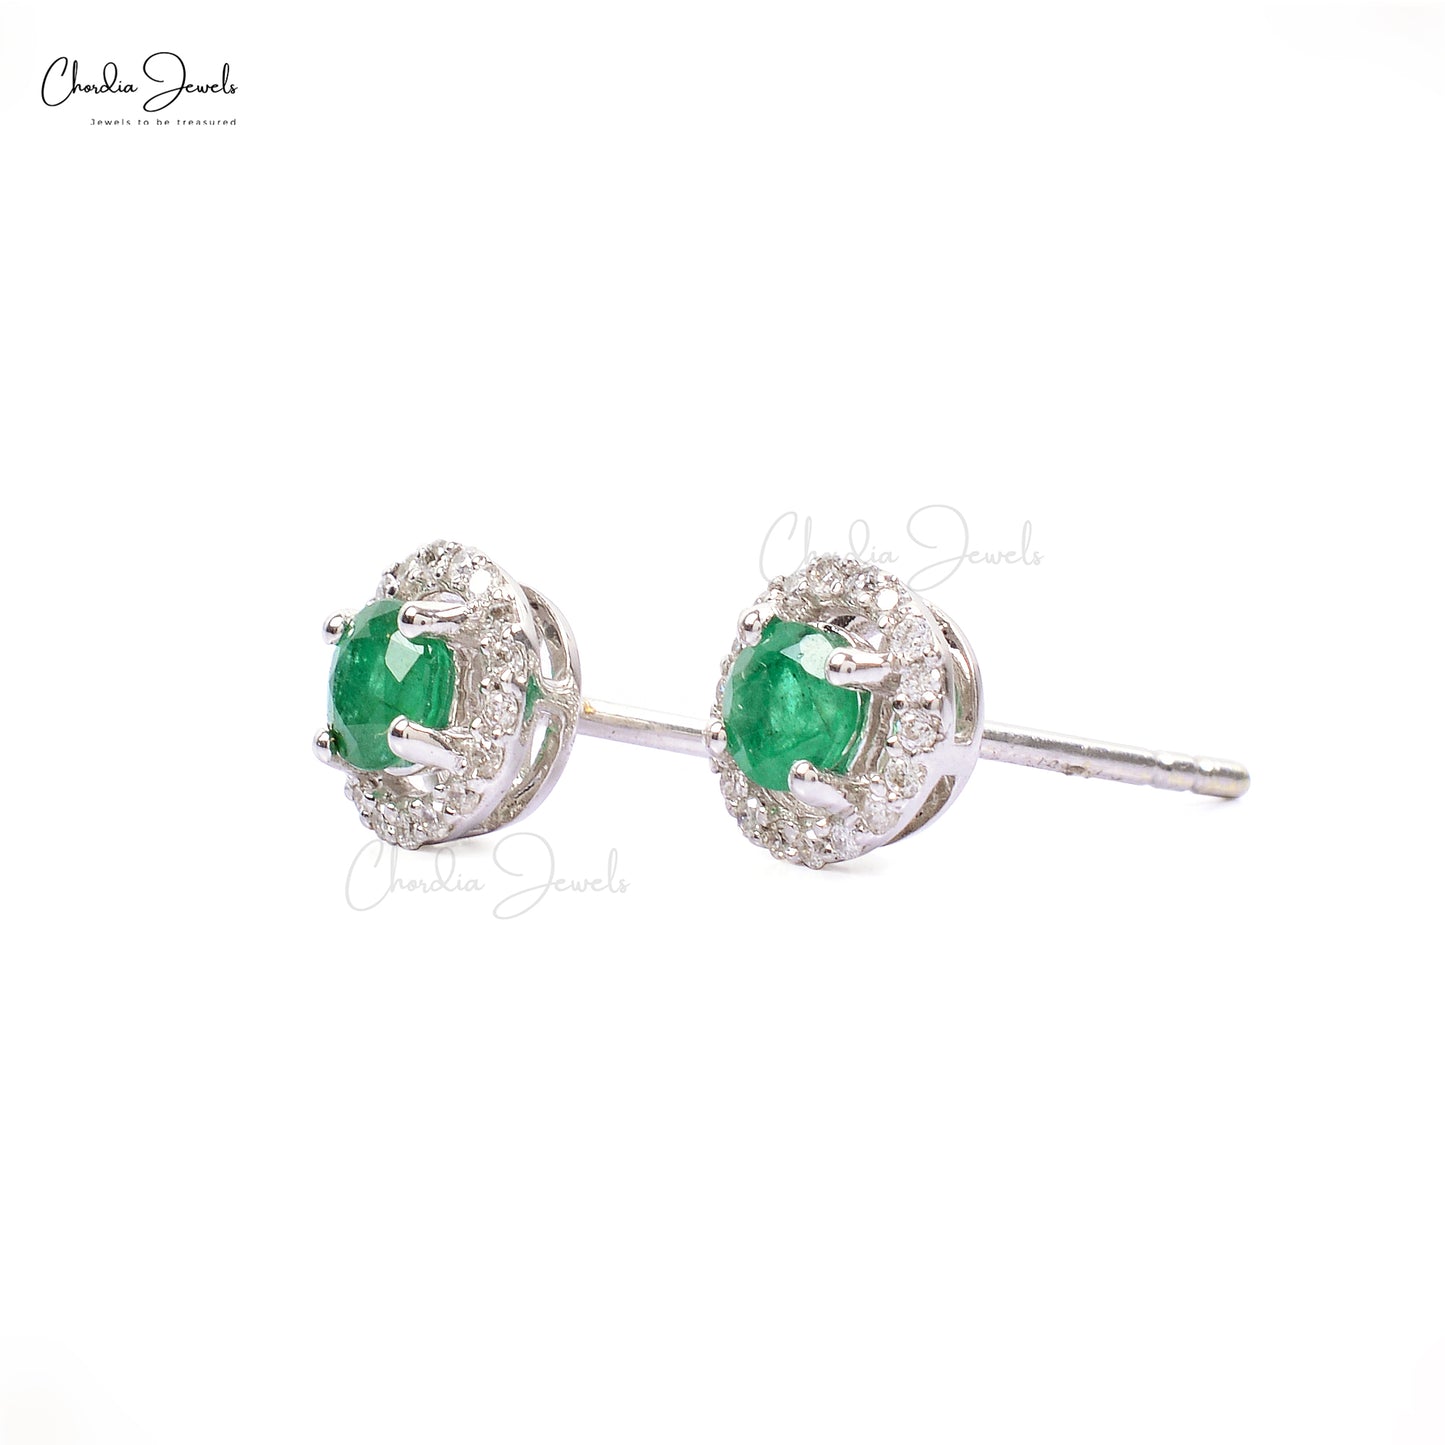 Genuine Emerald Earrings with Diamond Halo 14k White Gold 0.46ct Round Gemstone Earring